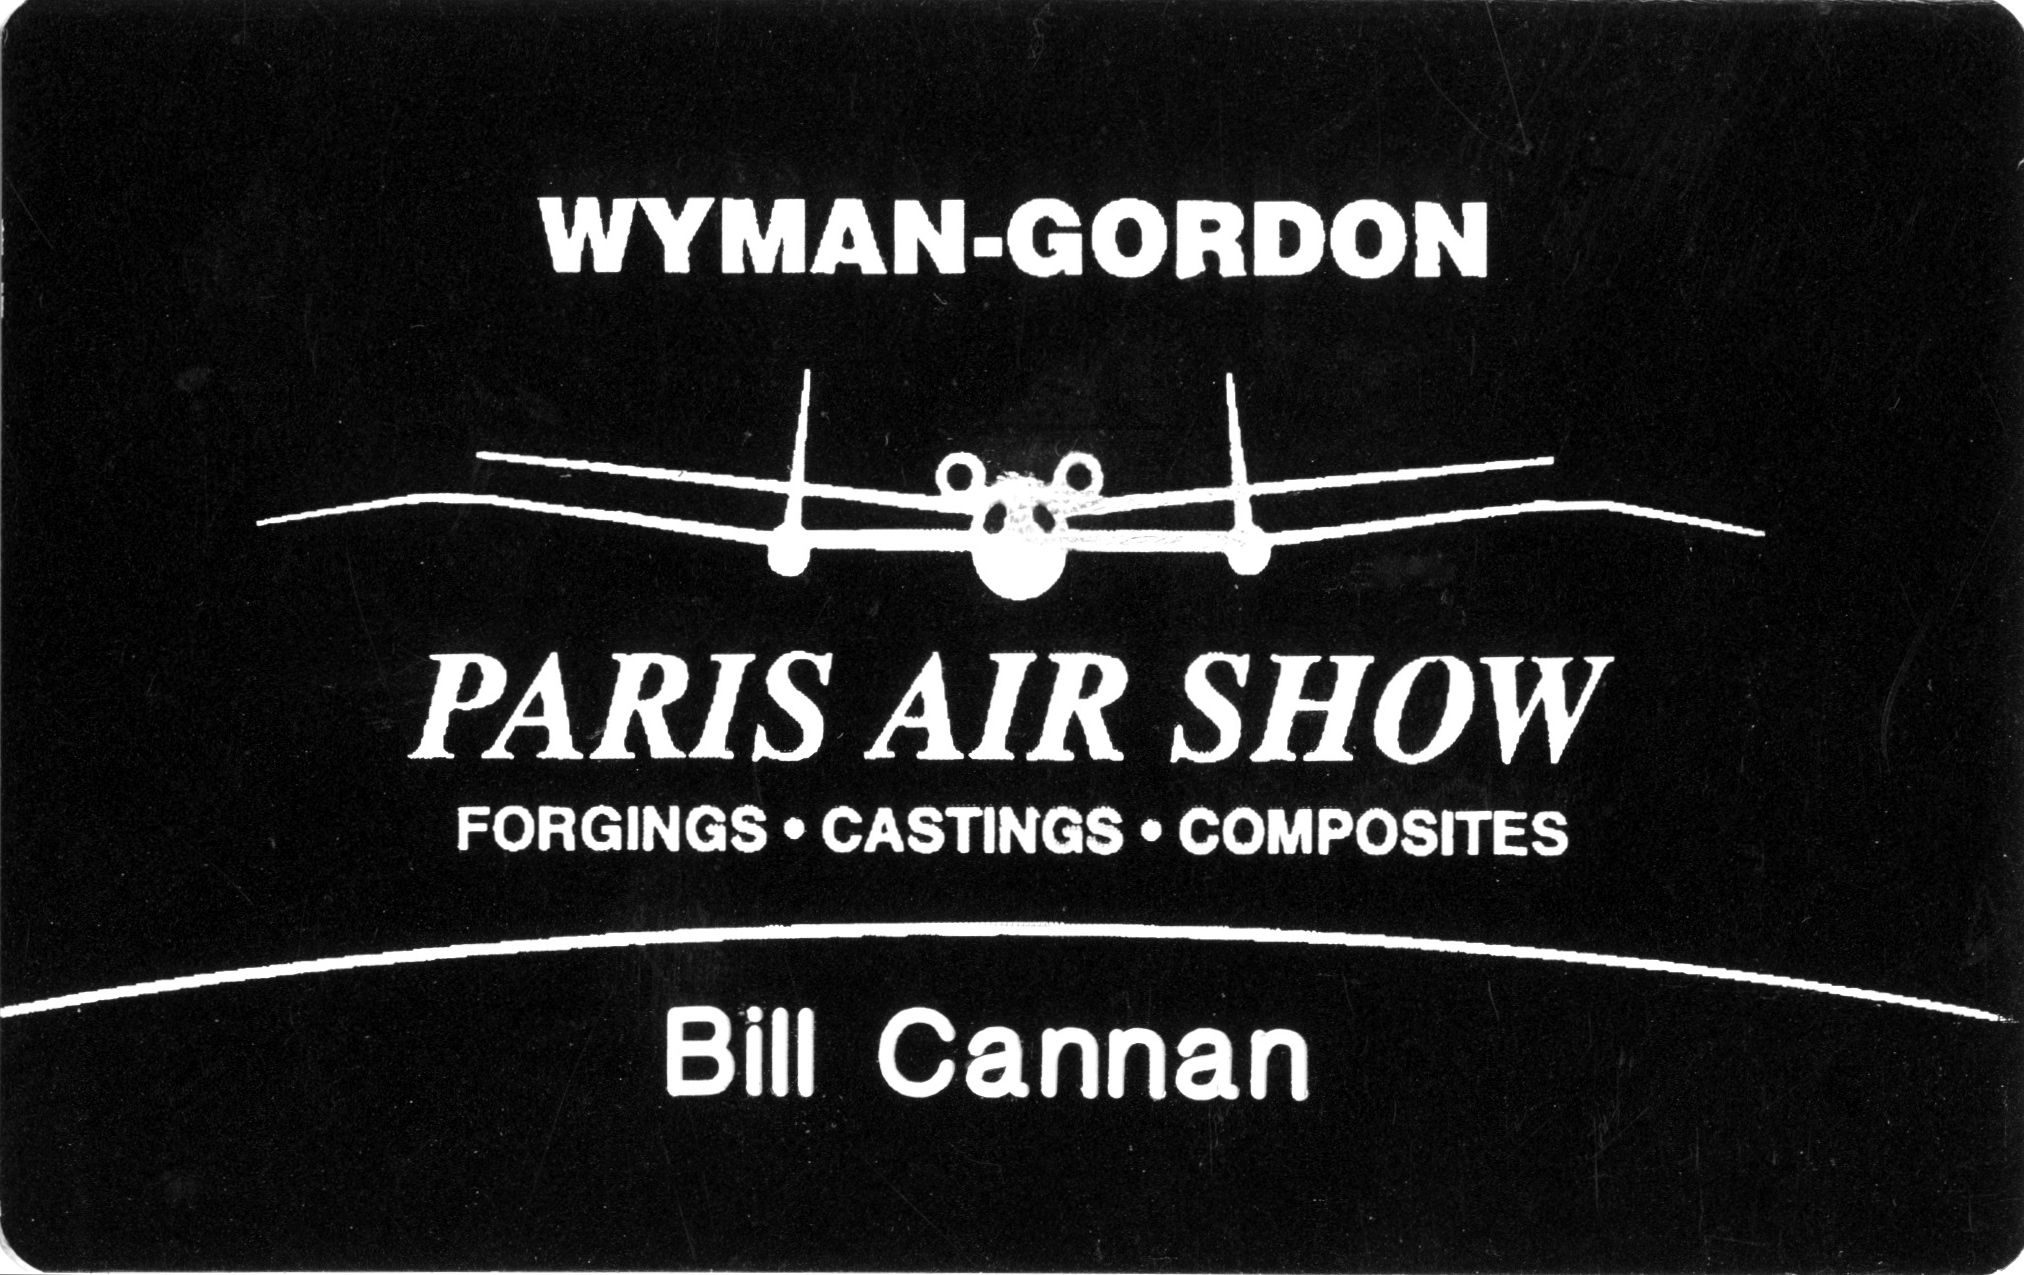 Bill Cannan's Paris Air Show / Wyman Gordon identification badge.